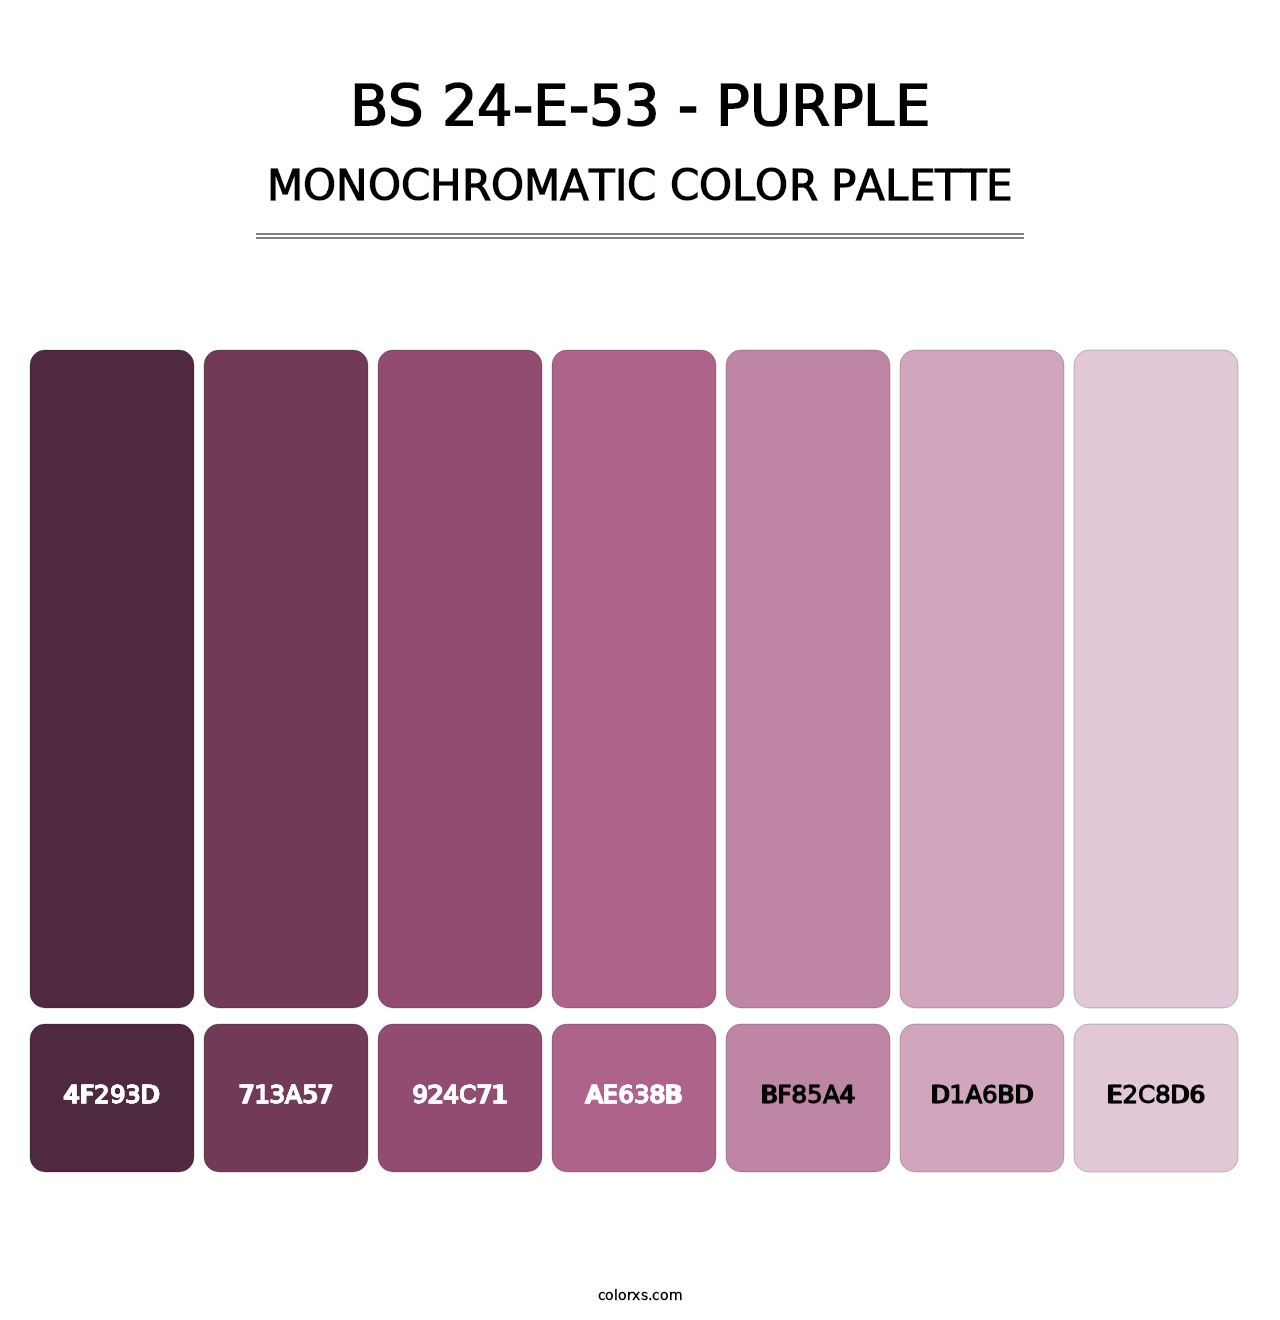 BS 24-E-53 - Purple - Monochromatic Color Palette